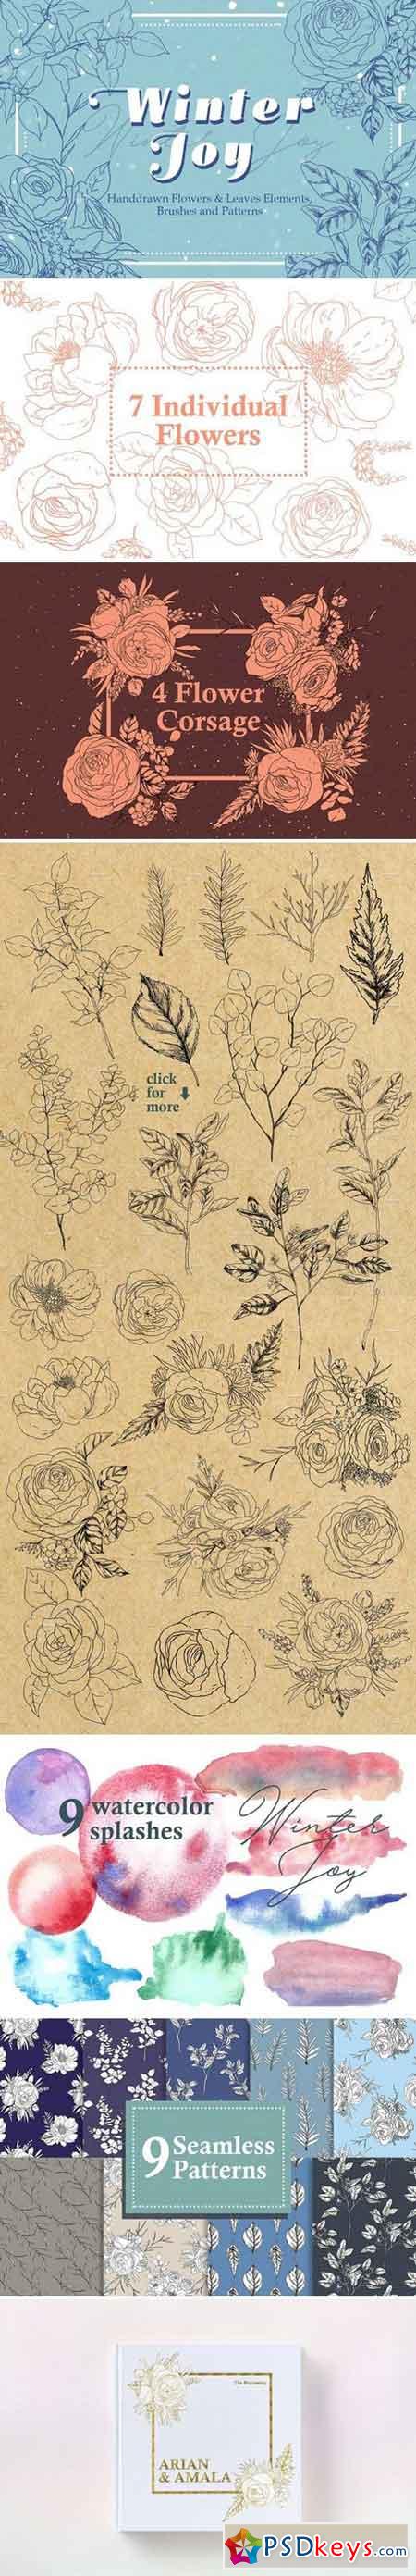 Winter Joy - Hand Drawn Flowers 2137099